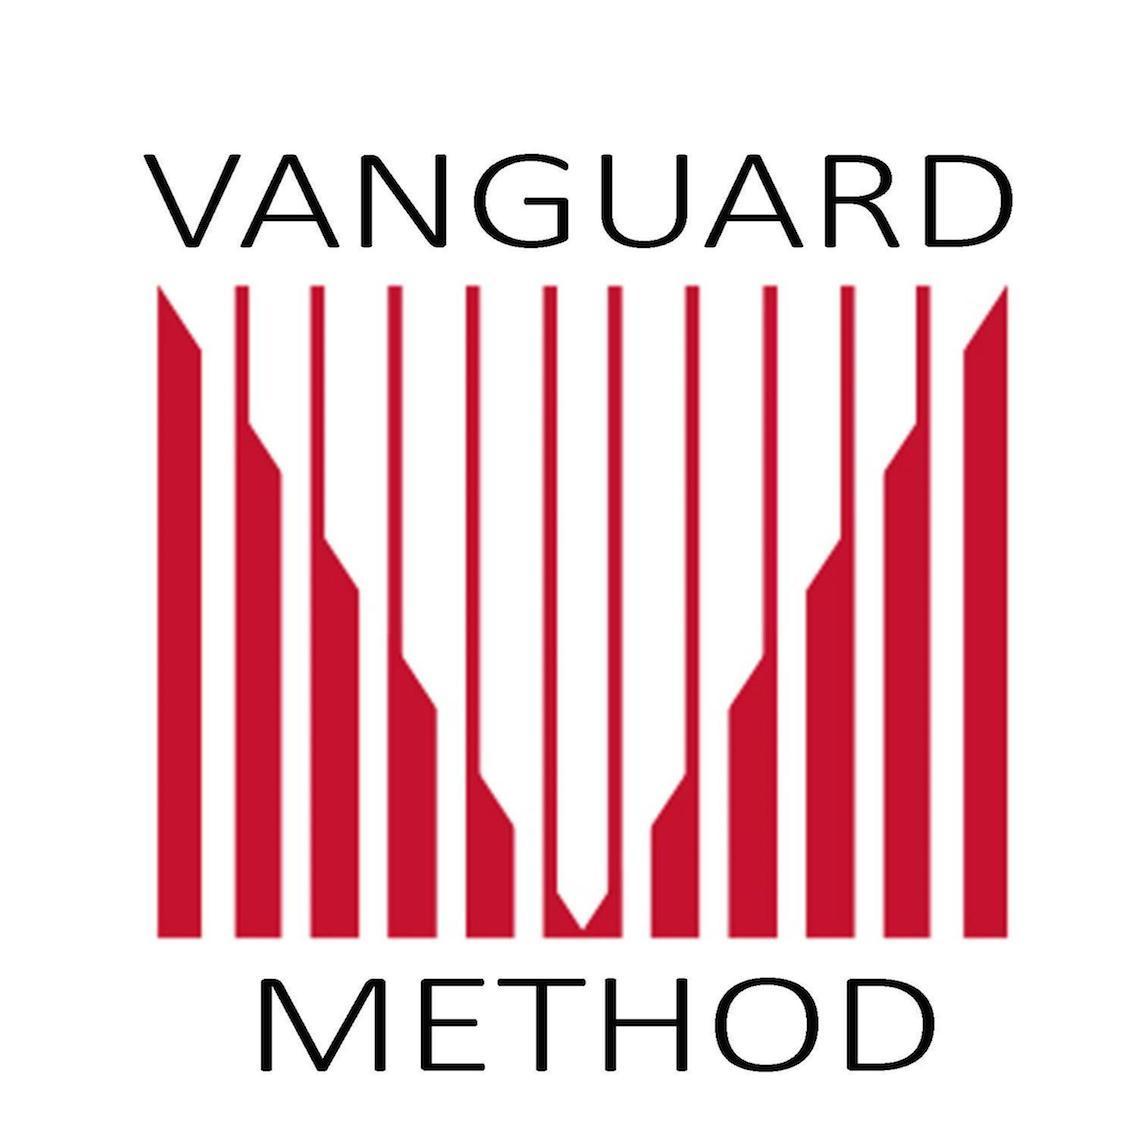 Vanguard-Method-URL-logo.jpg